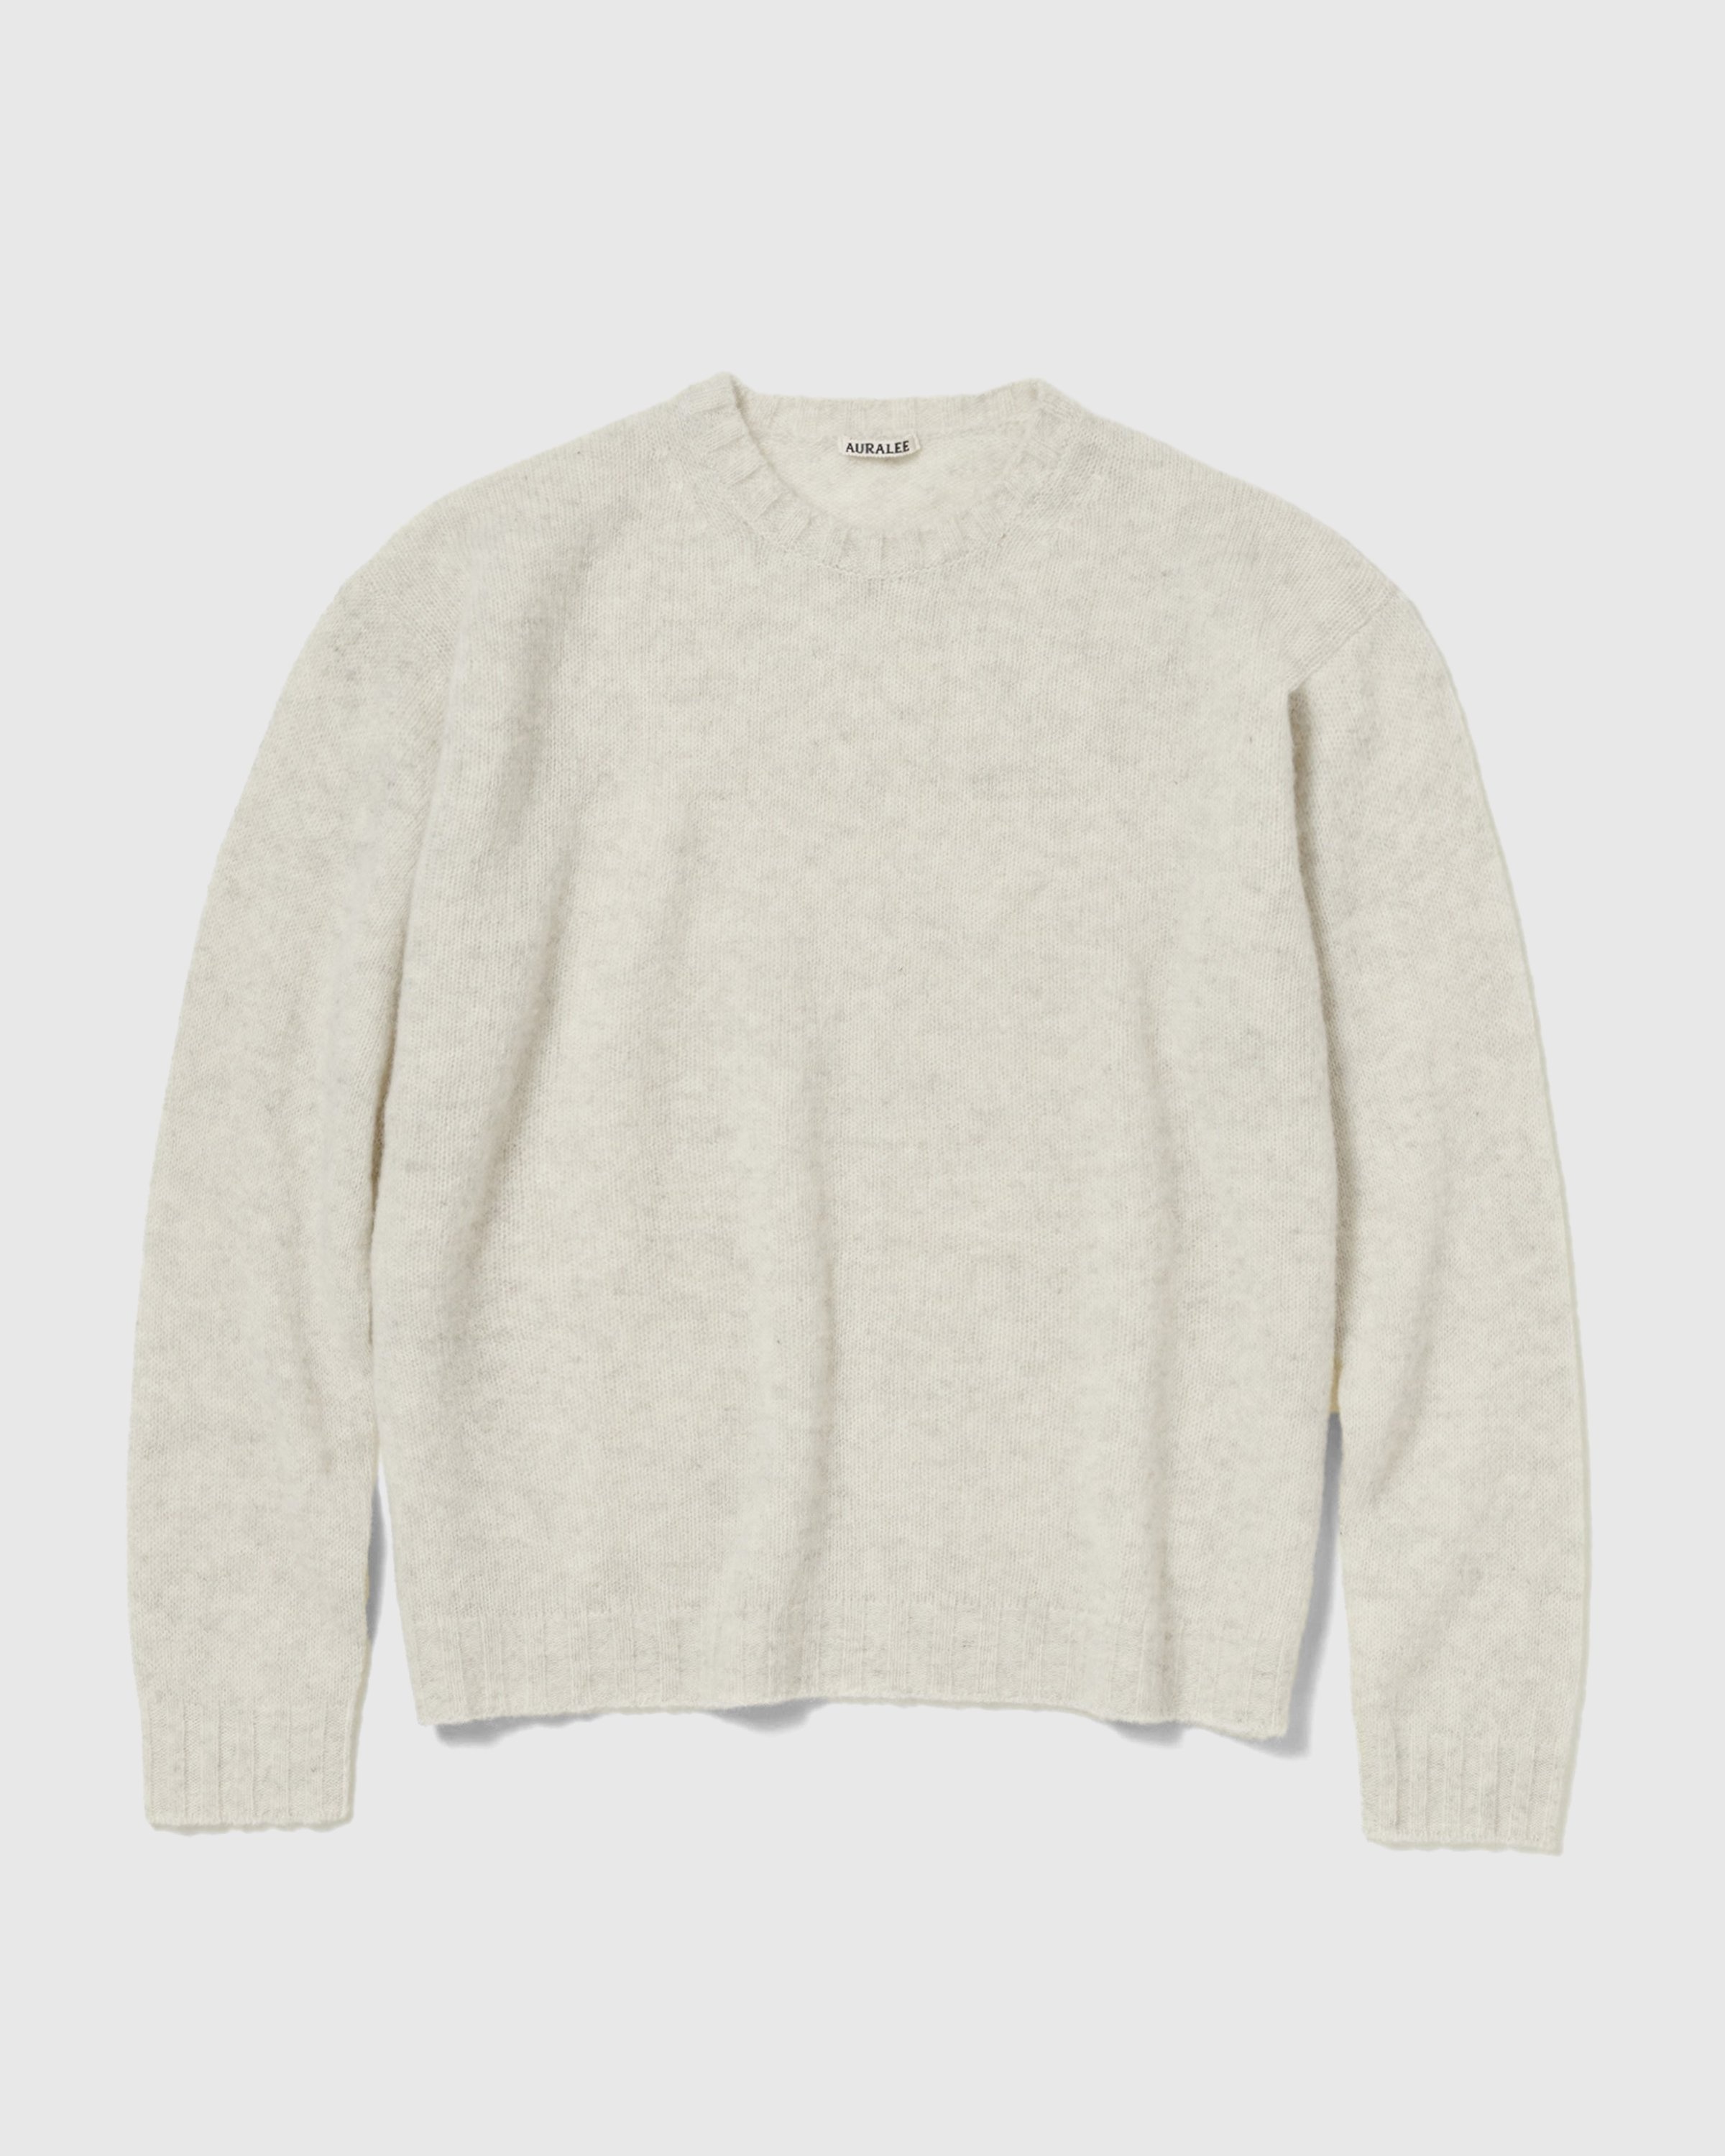 Auralee – Shetland Wool Cashmere Knit | Highsnobiety Shop